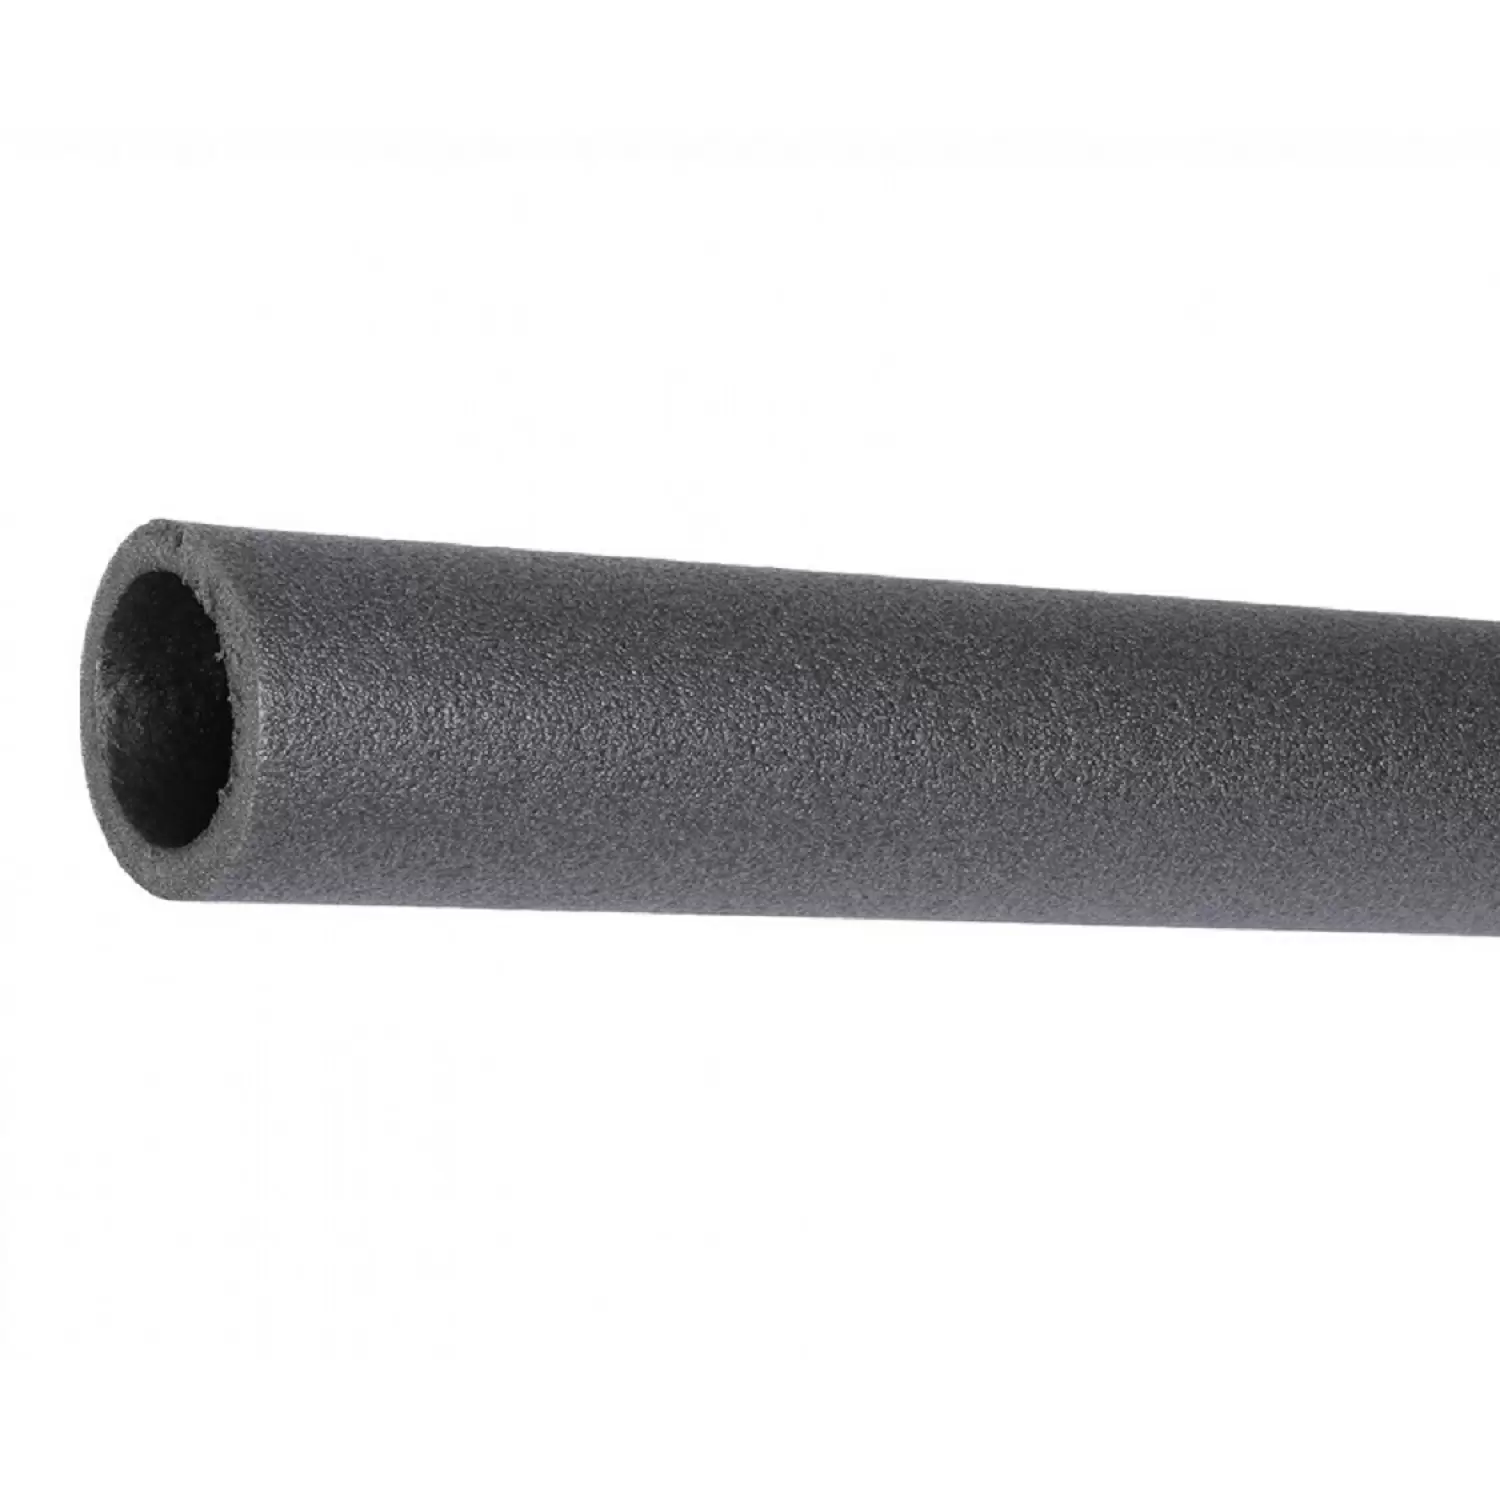 Теплоизоляция Энергофлекс супер 35/6 для труб диаметром 32 мм, трубка 2 м